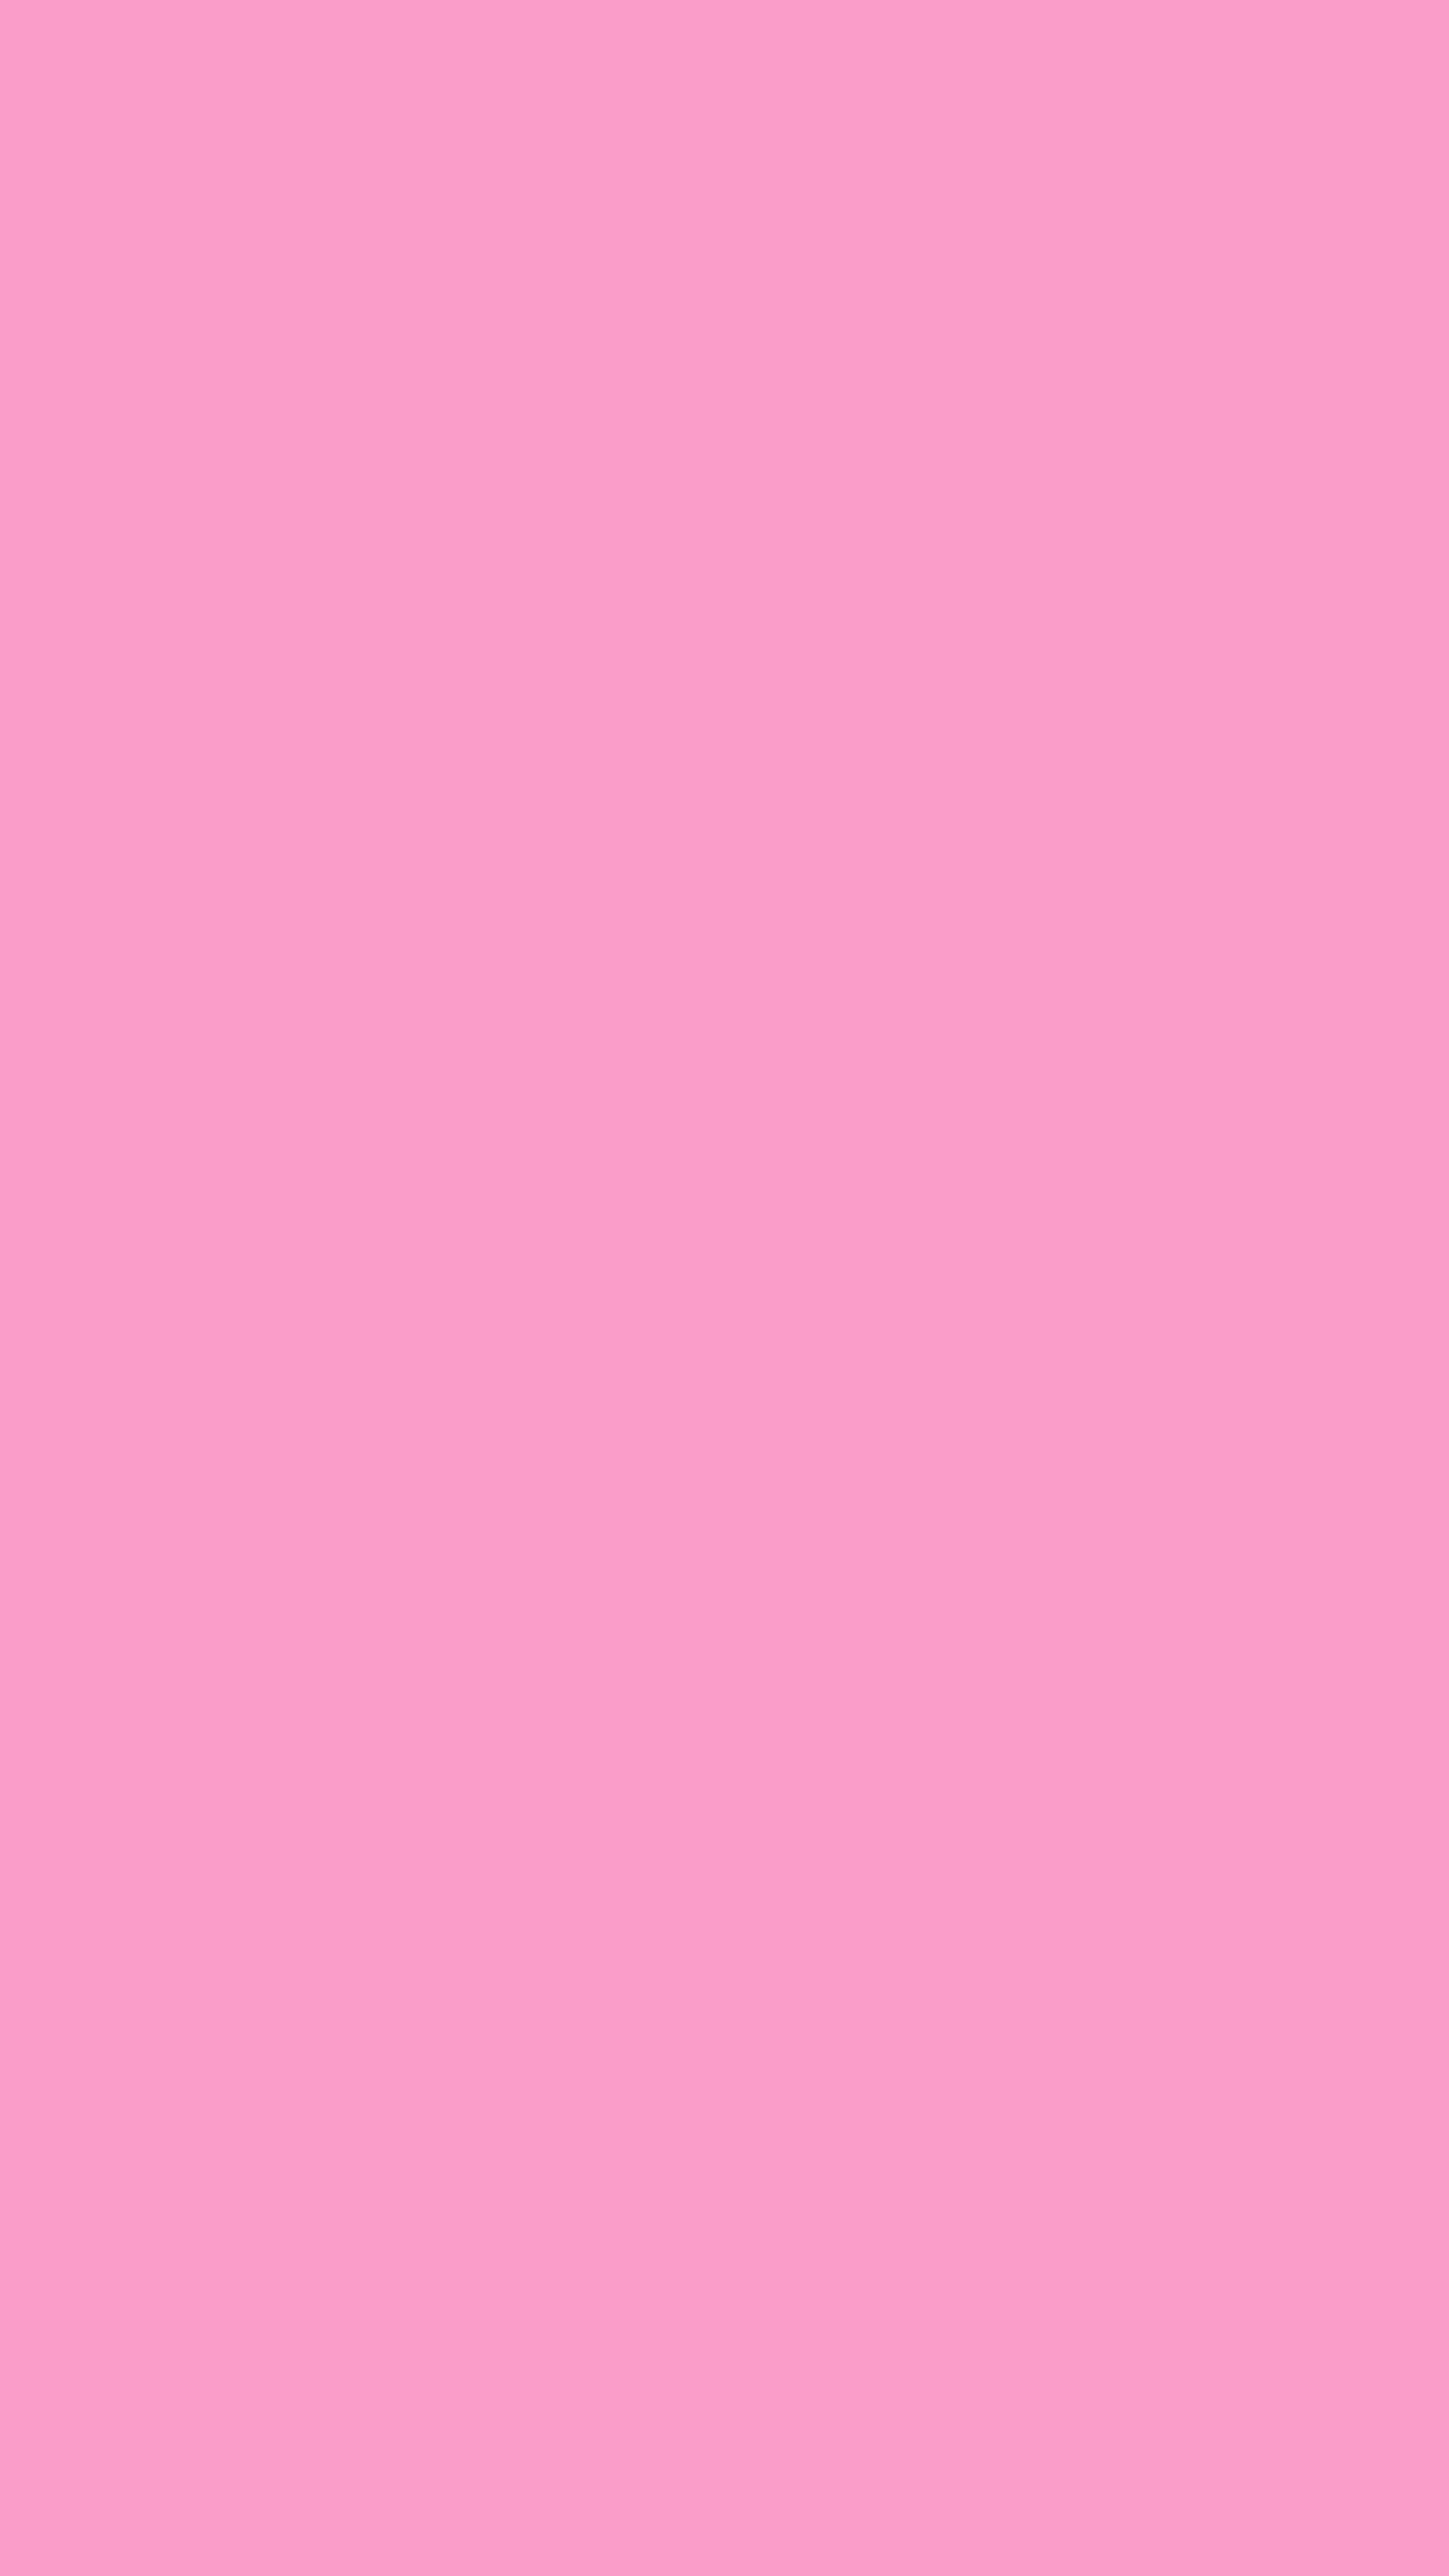 Light Pink Background Images  Free Download on Freepik